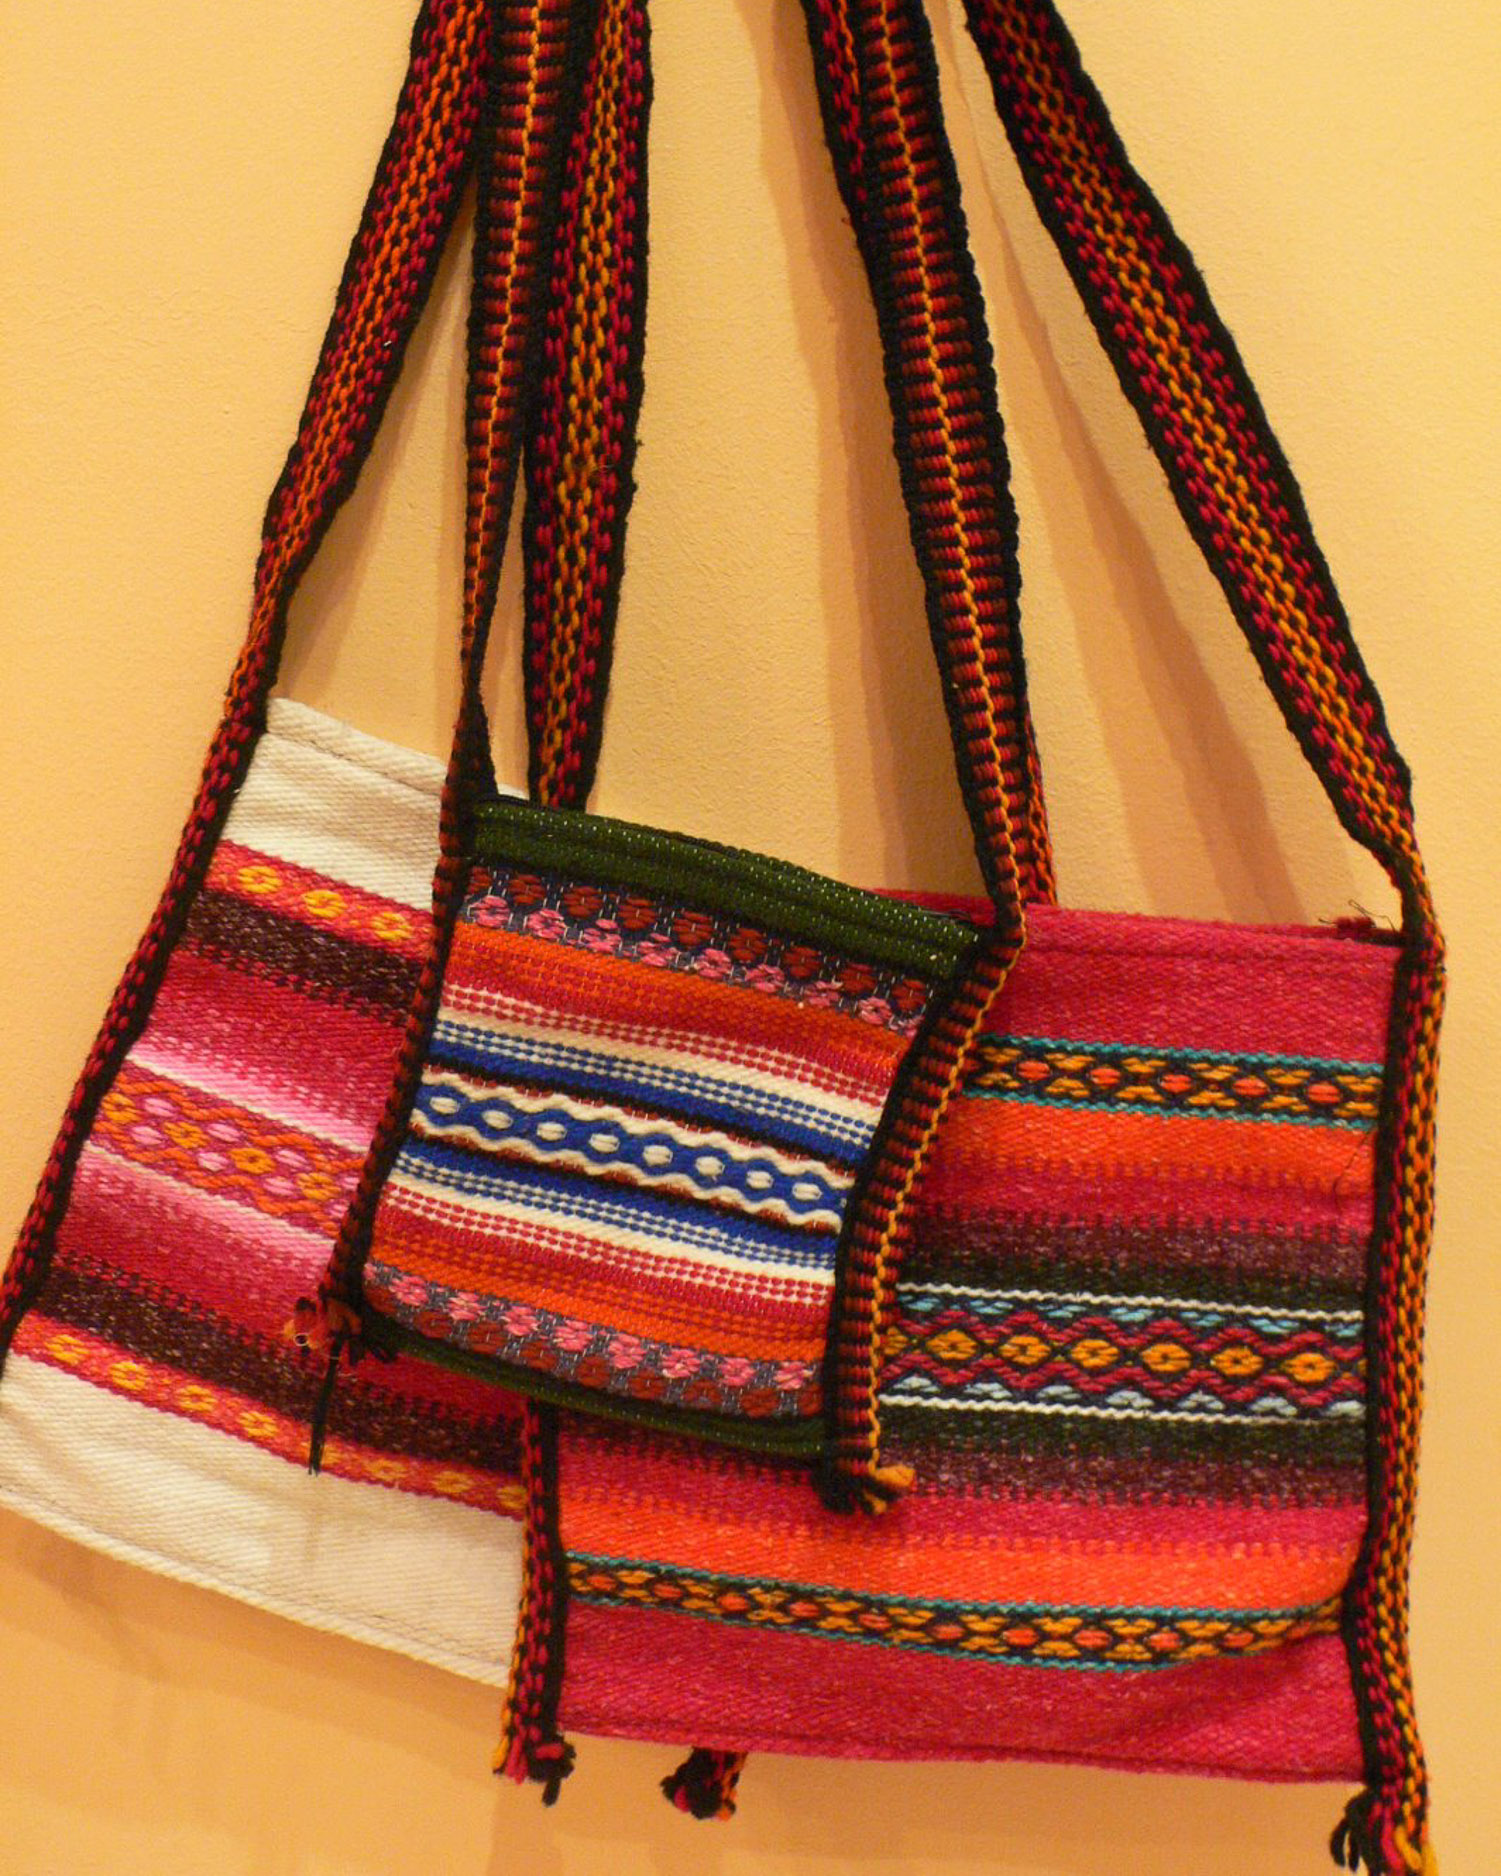 Bags from Ecuador Photo Heatheronhertravels.com